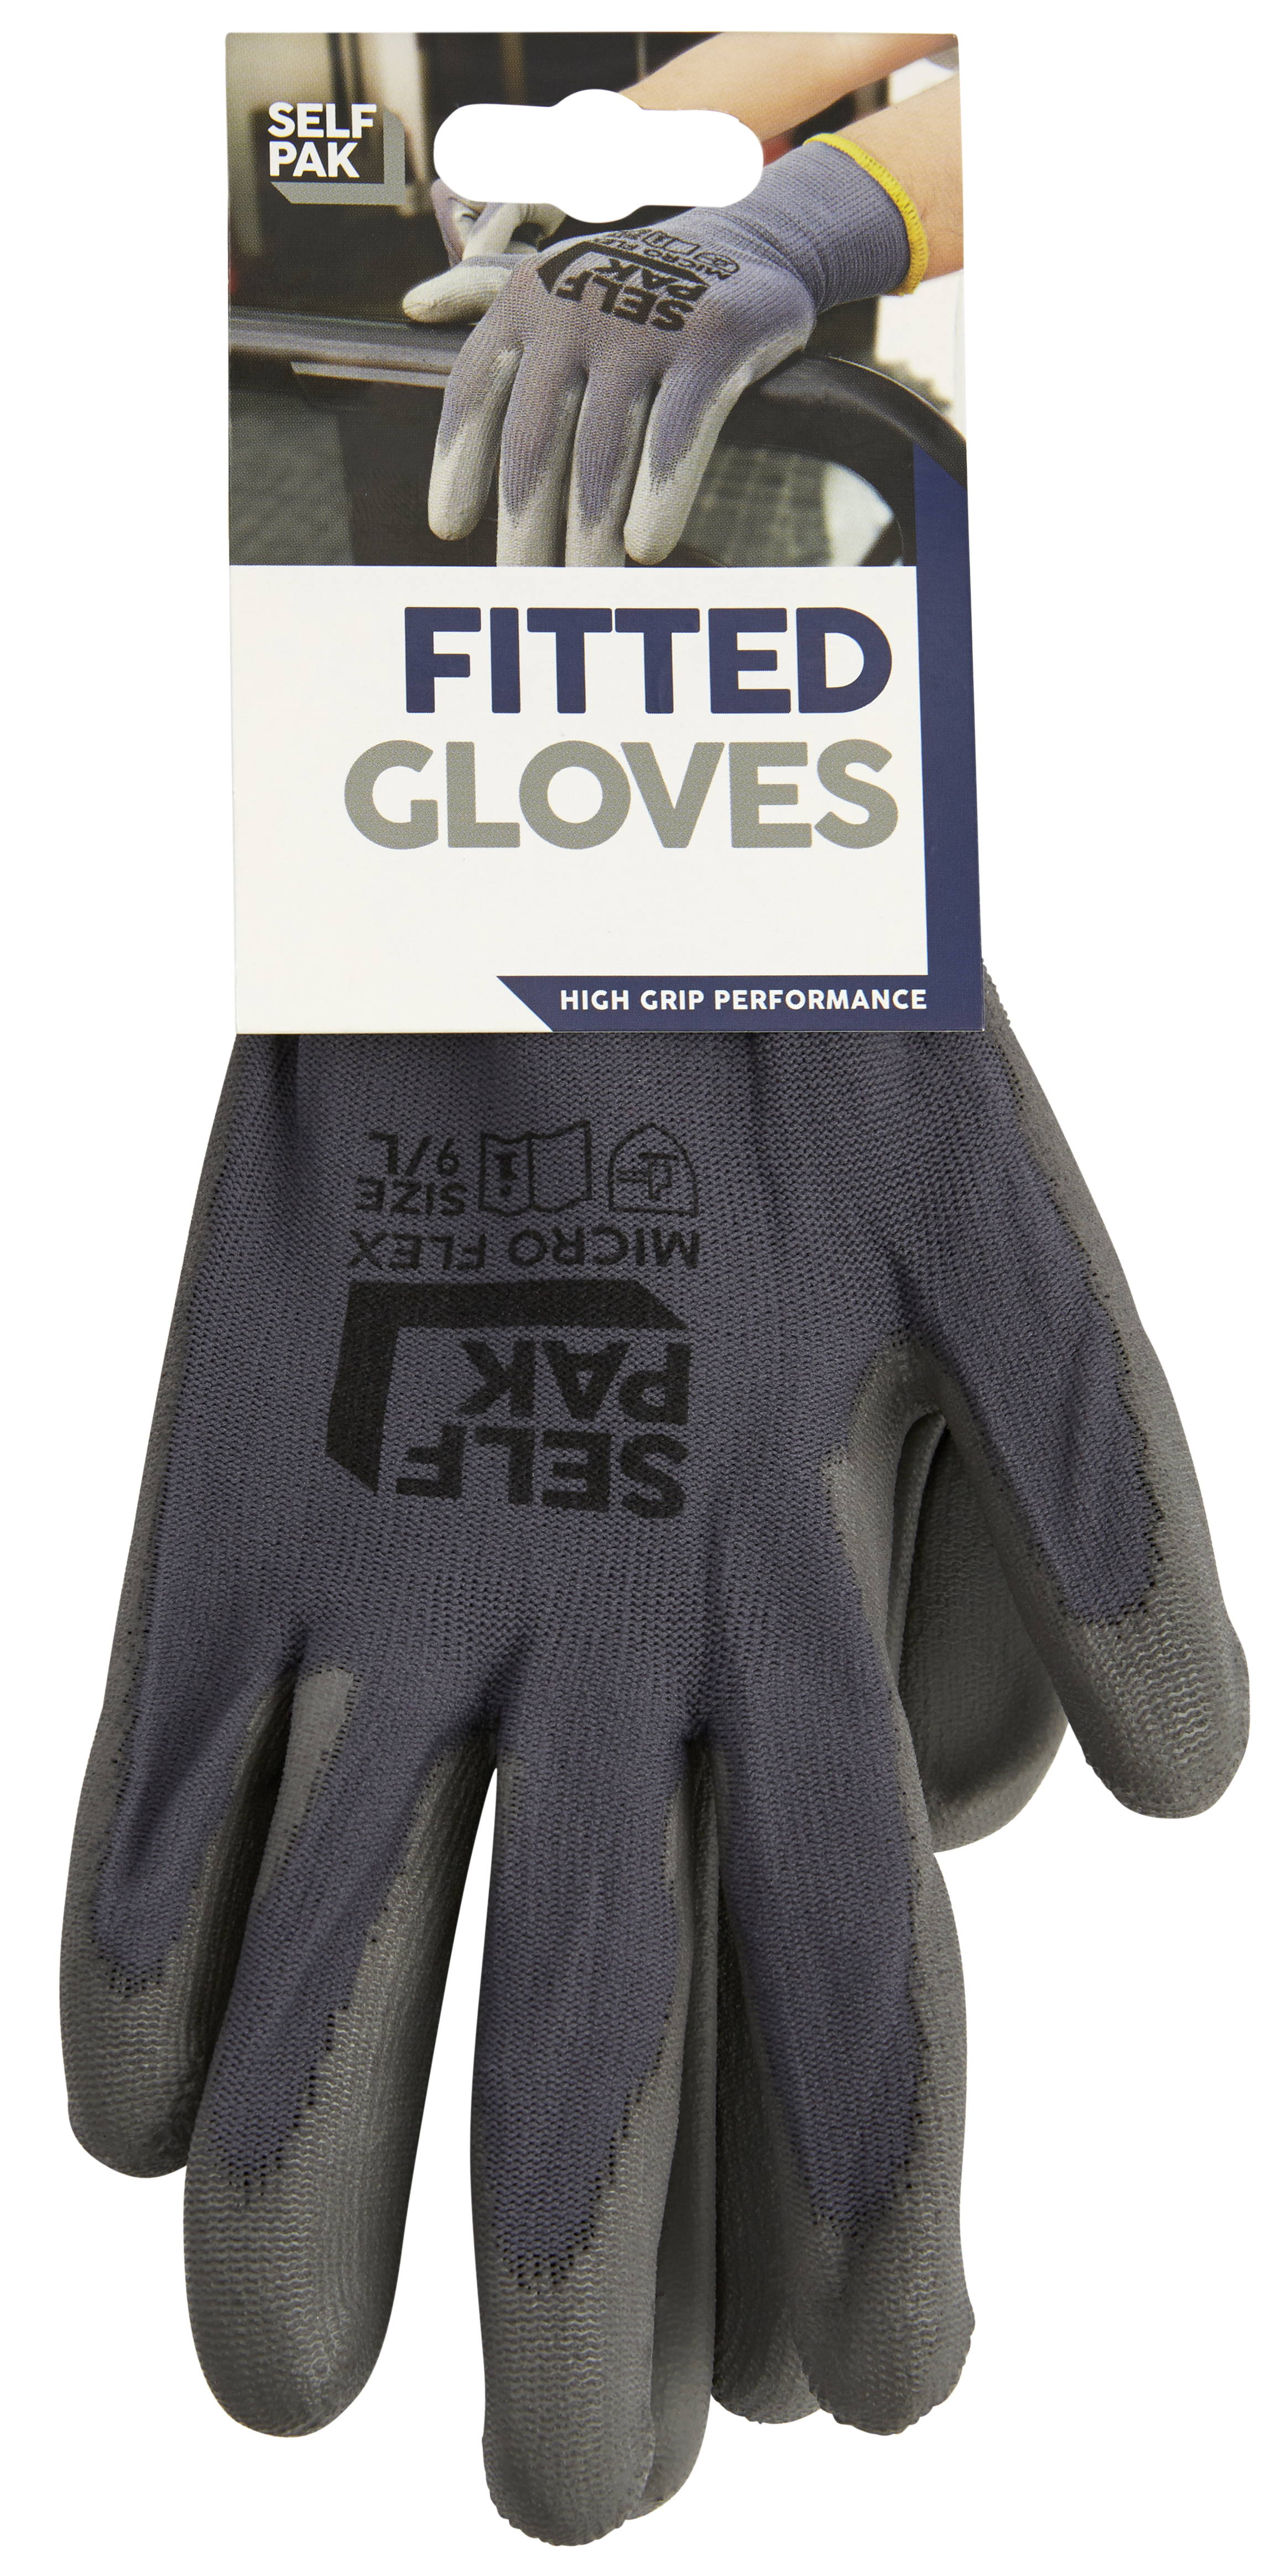 Moving gloves